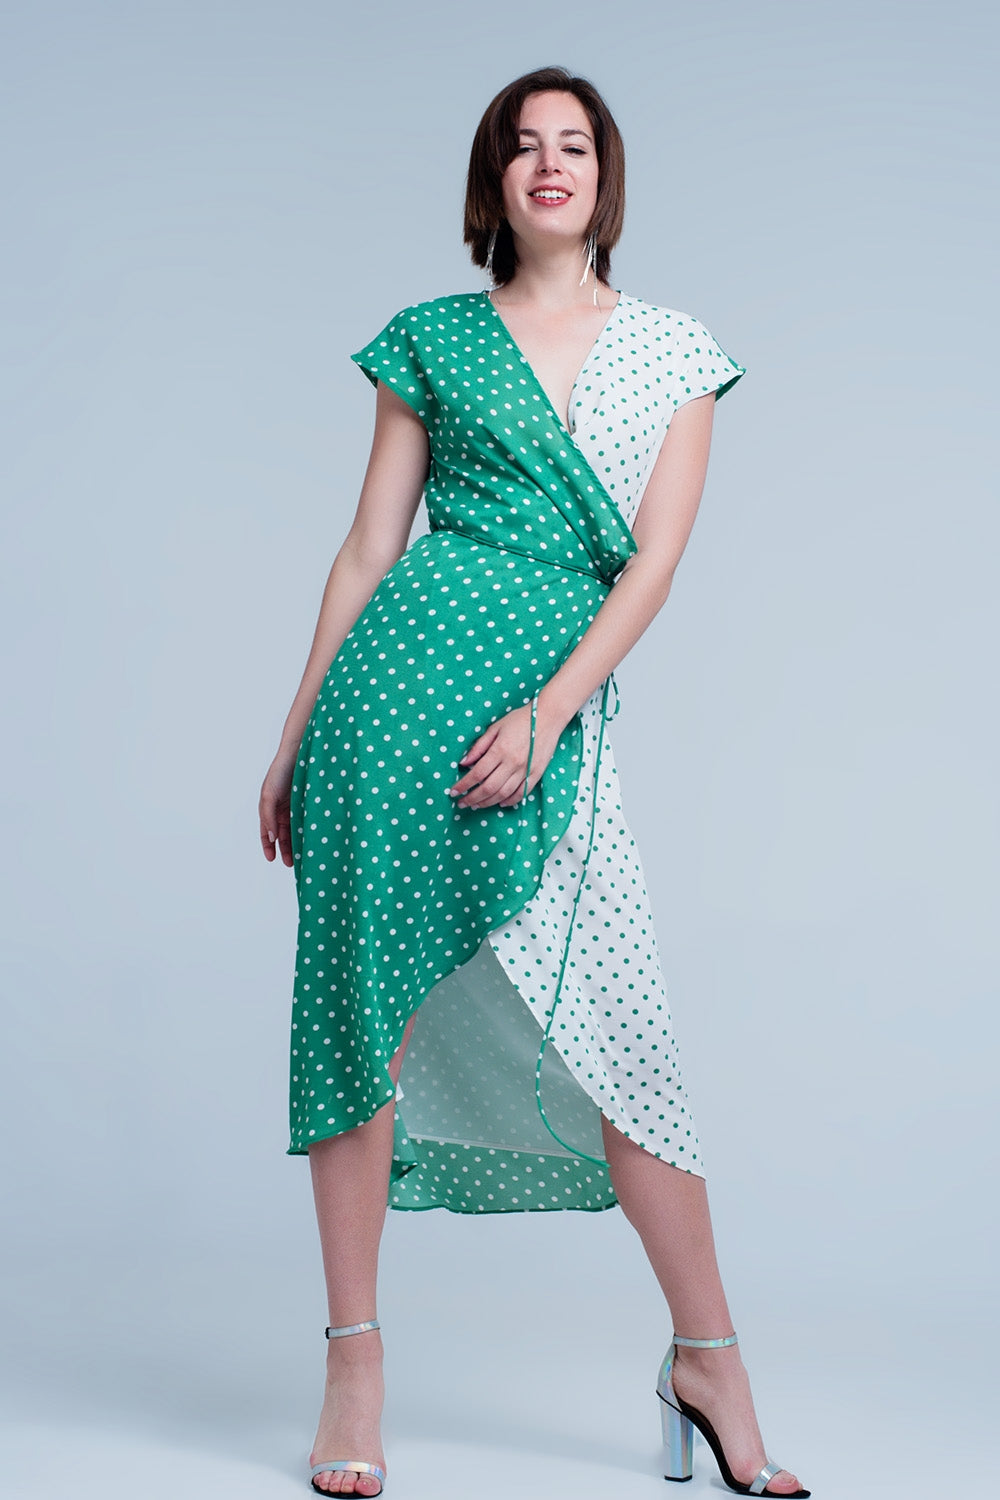 Q2 Green dress with polka dots